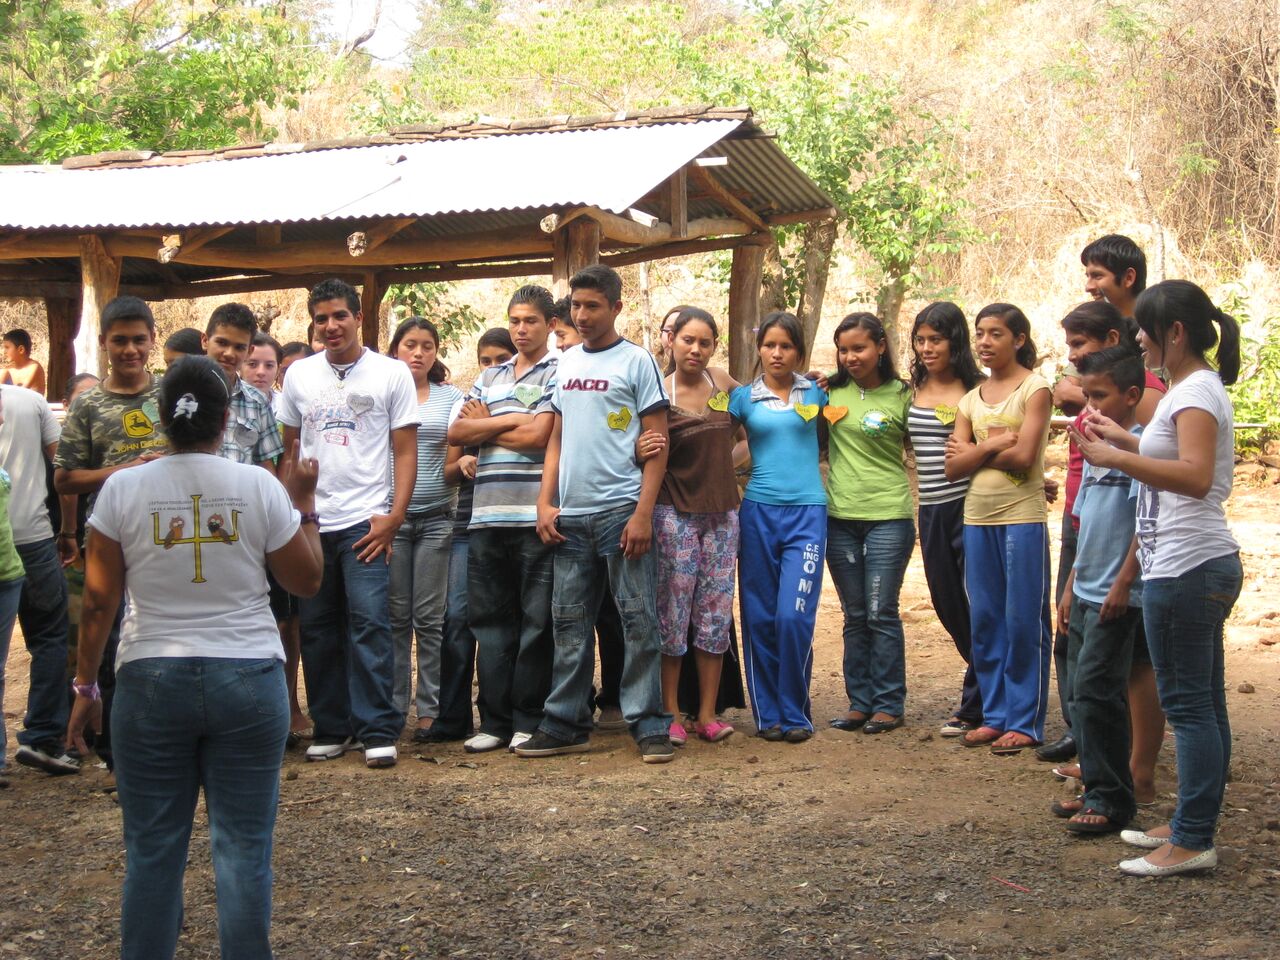 Project Taquillo in El Salvador